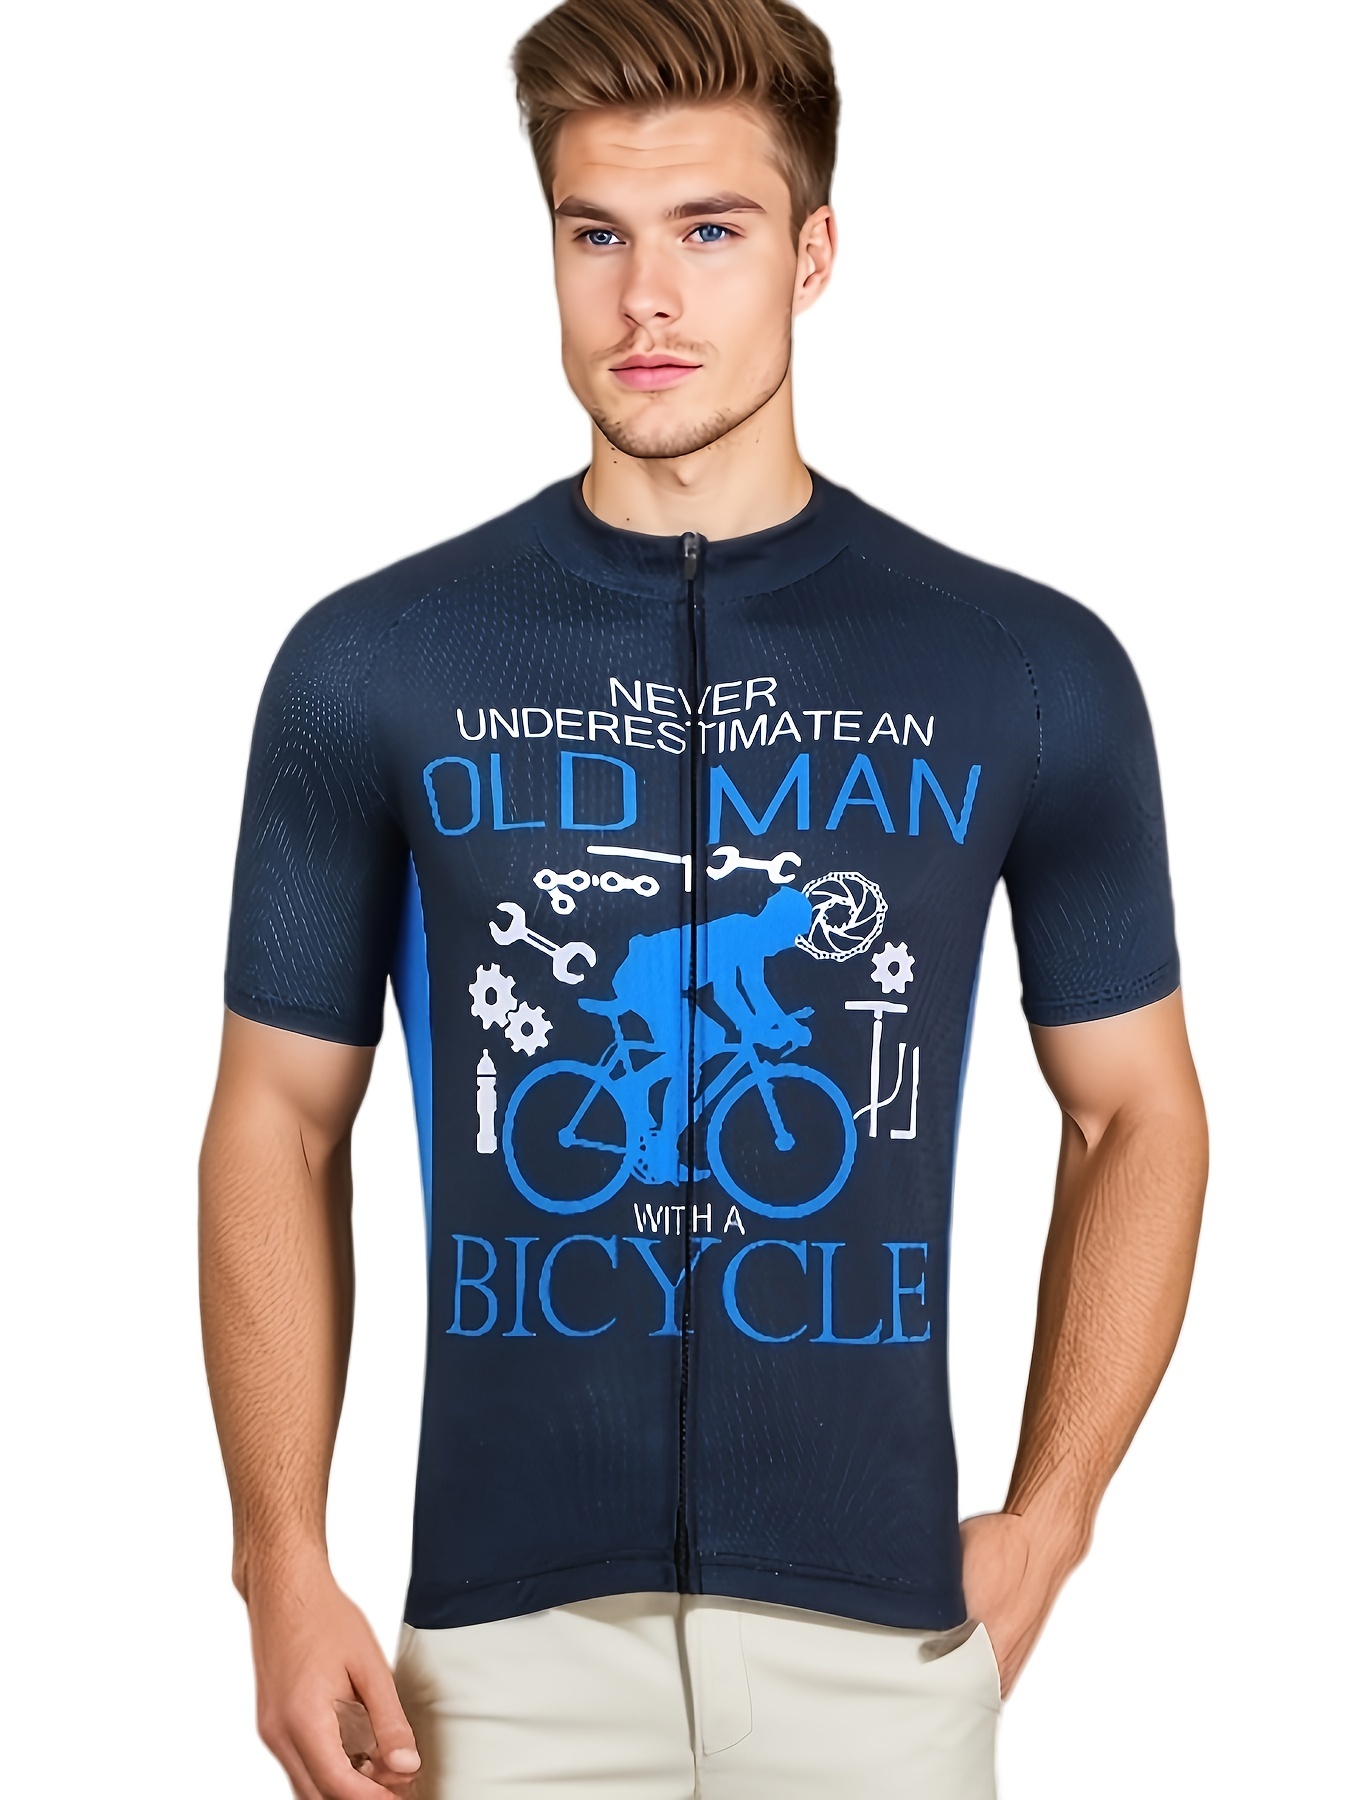 BEDSETS Ropa de Ciclismo Maillot Ciclismo Hombre Completo Camiseta